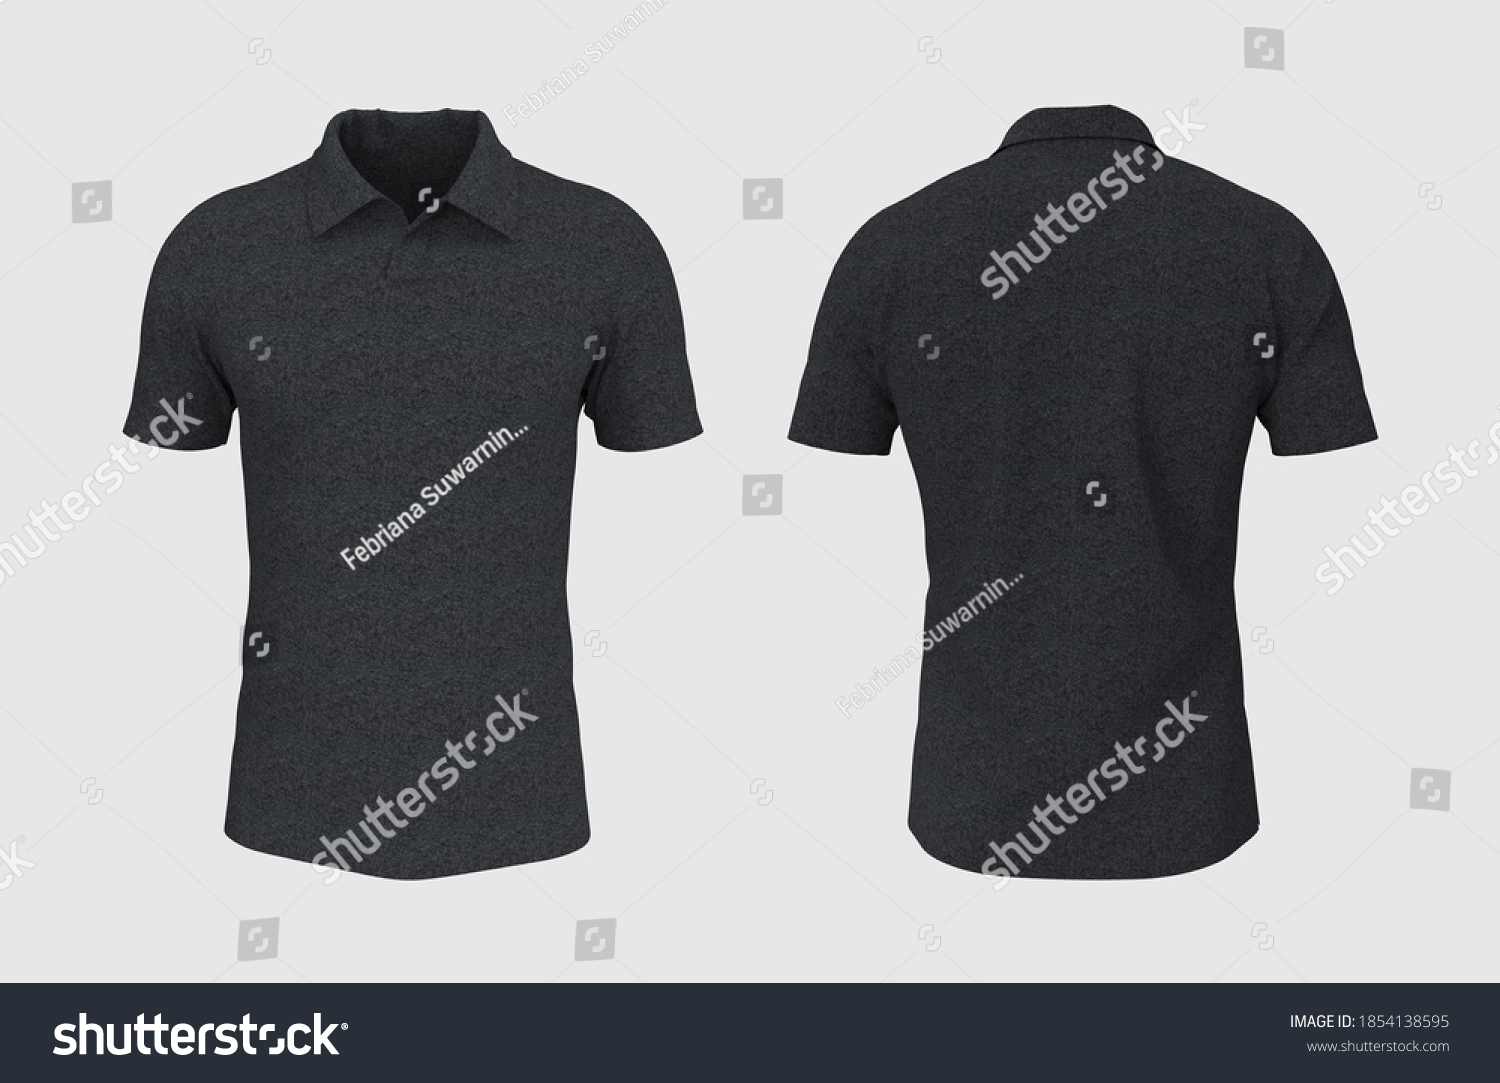 Blank Short Sleeve Collared Shirt Mockup Stock Illustration 1854138595 ...